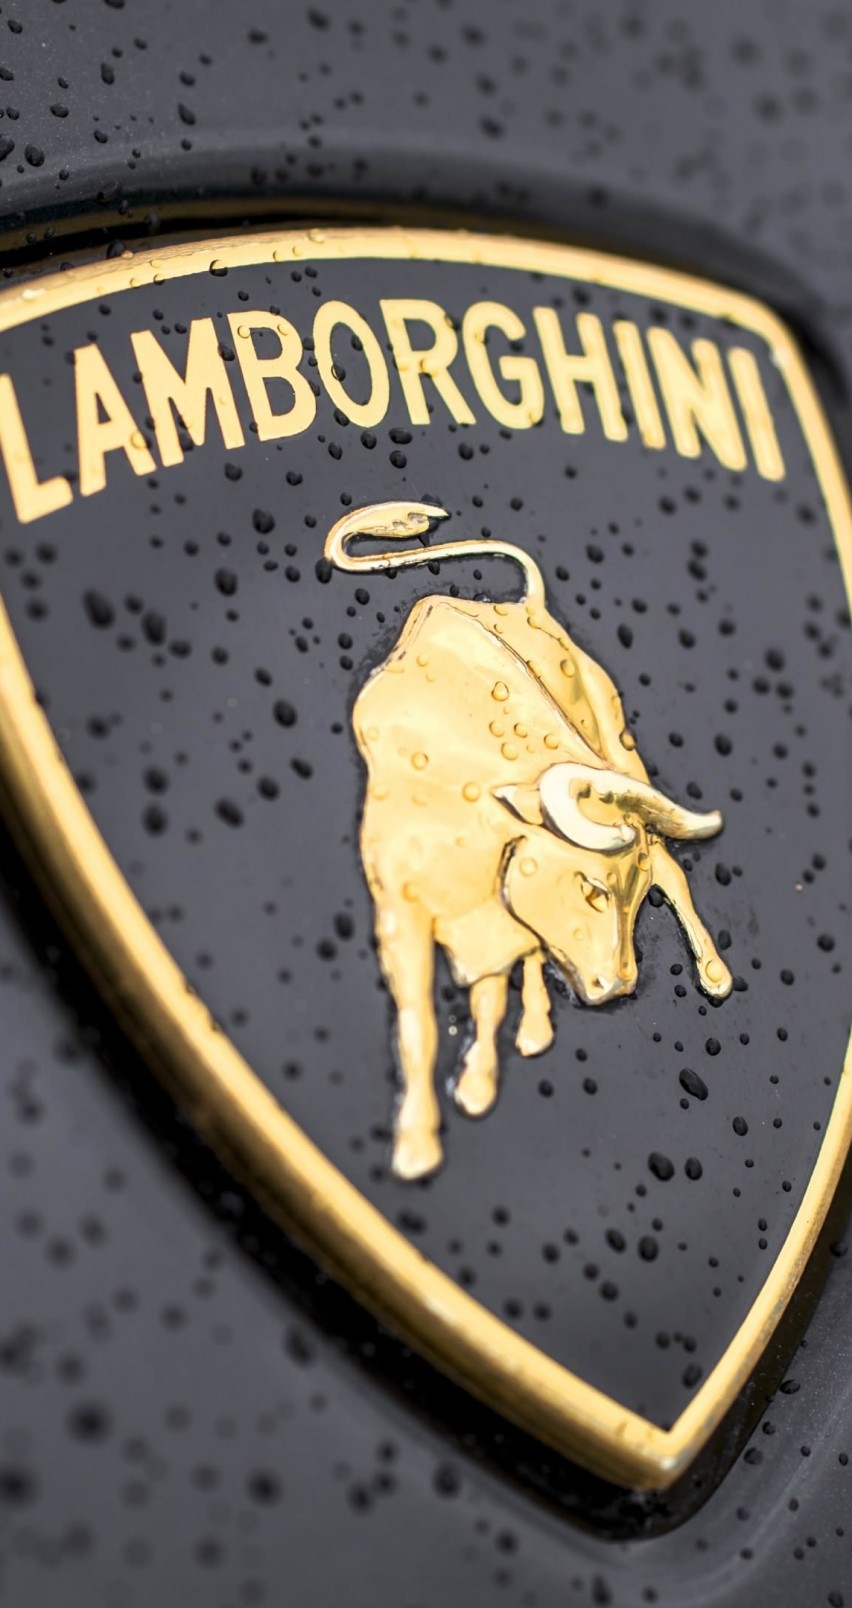 Lamborghini Logo Wallpaper for Apple iPhone 6 / 6s